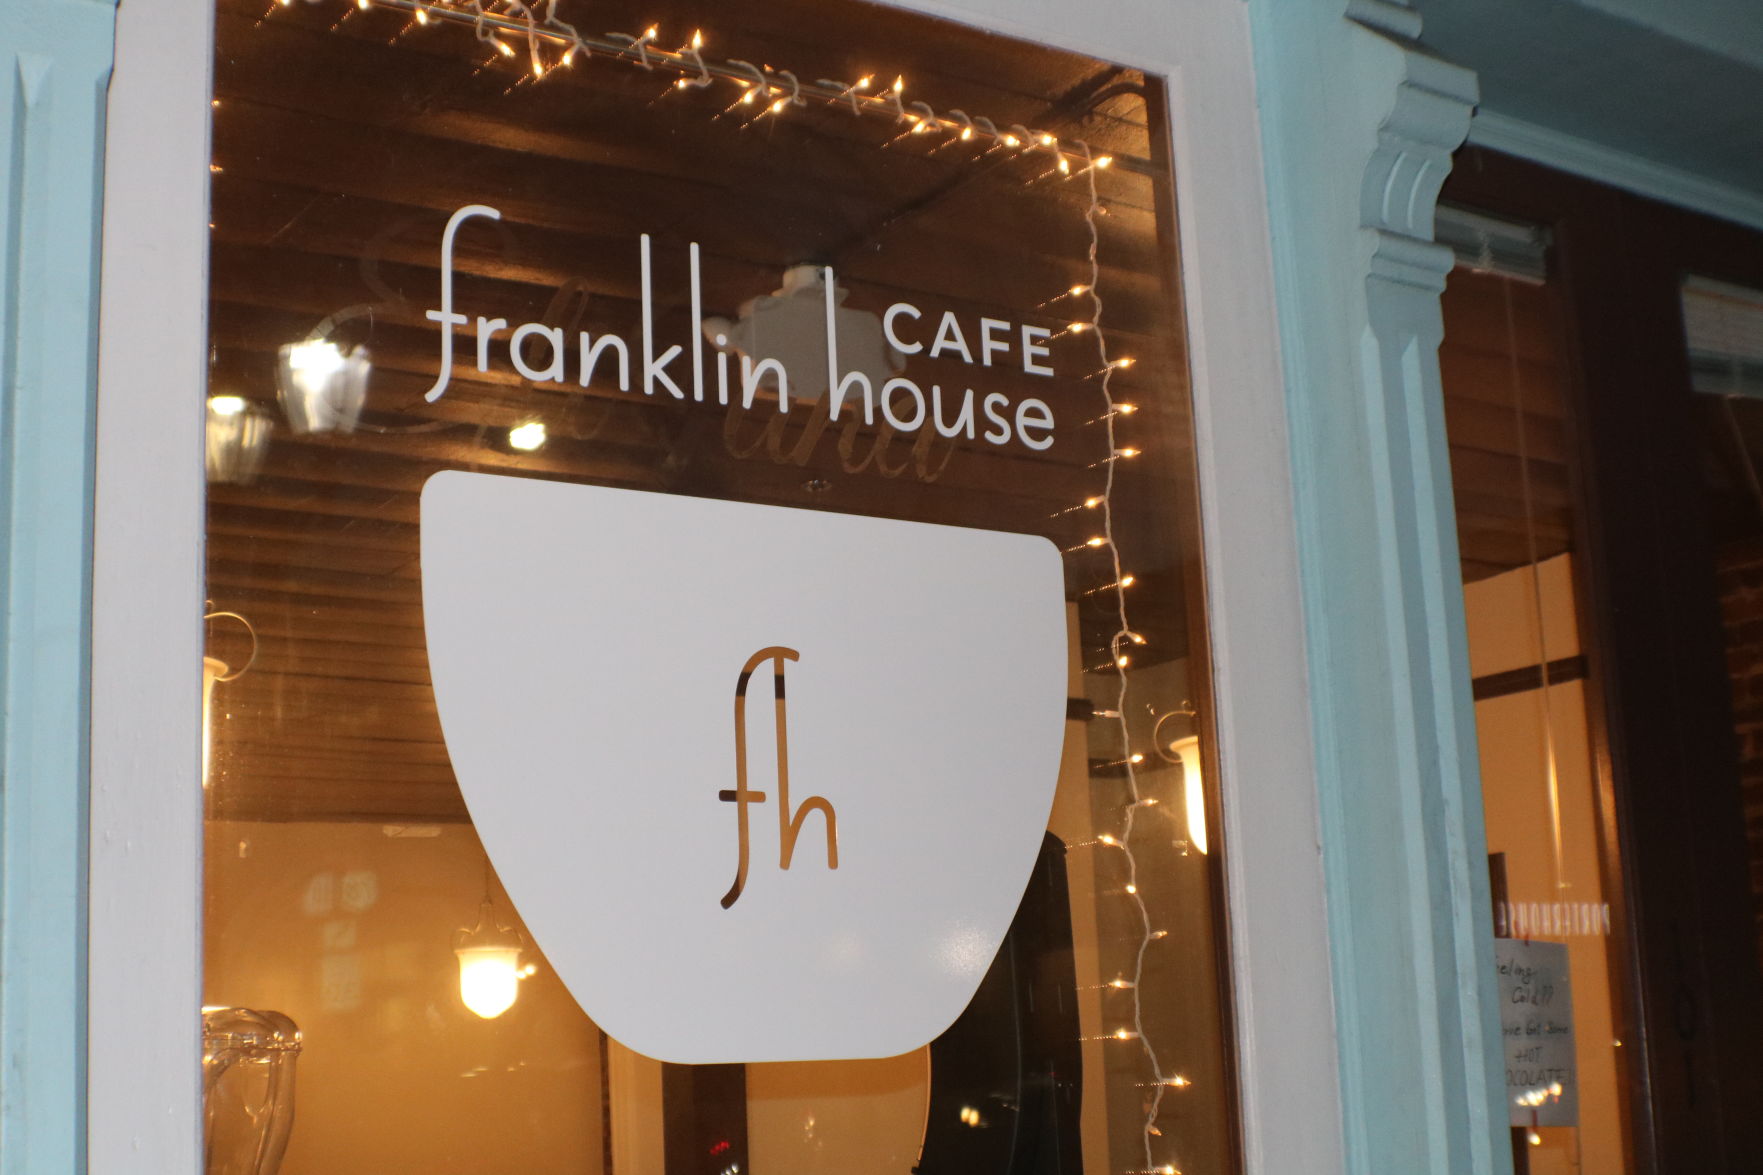 fireside cafe in franklin